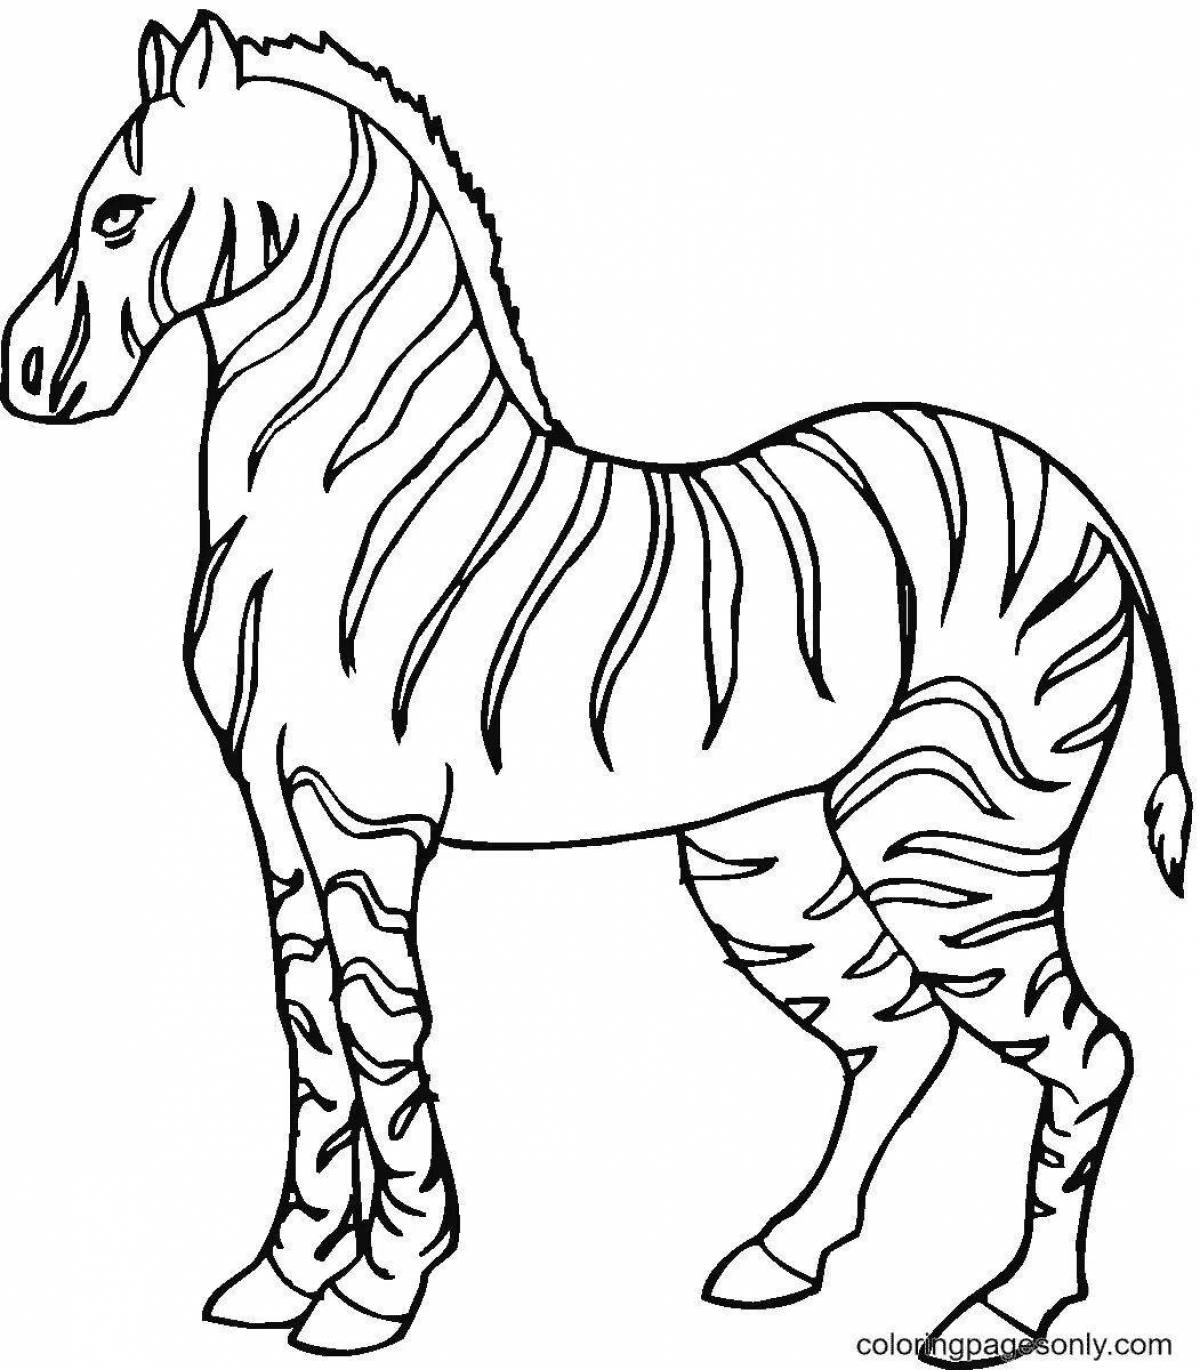 Zebra pattern #3